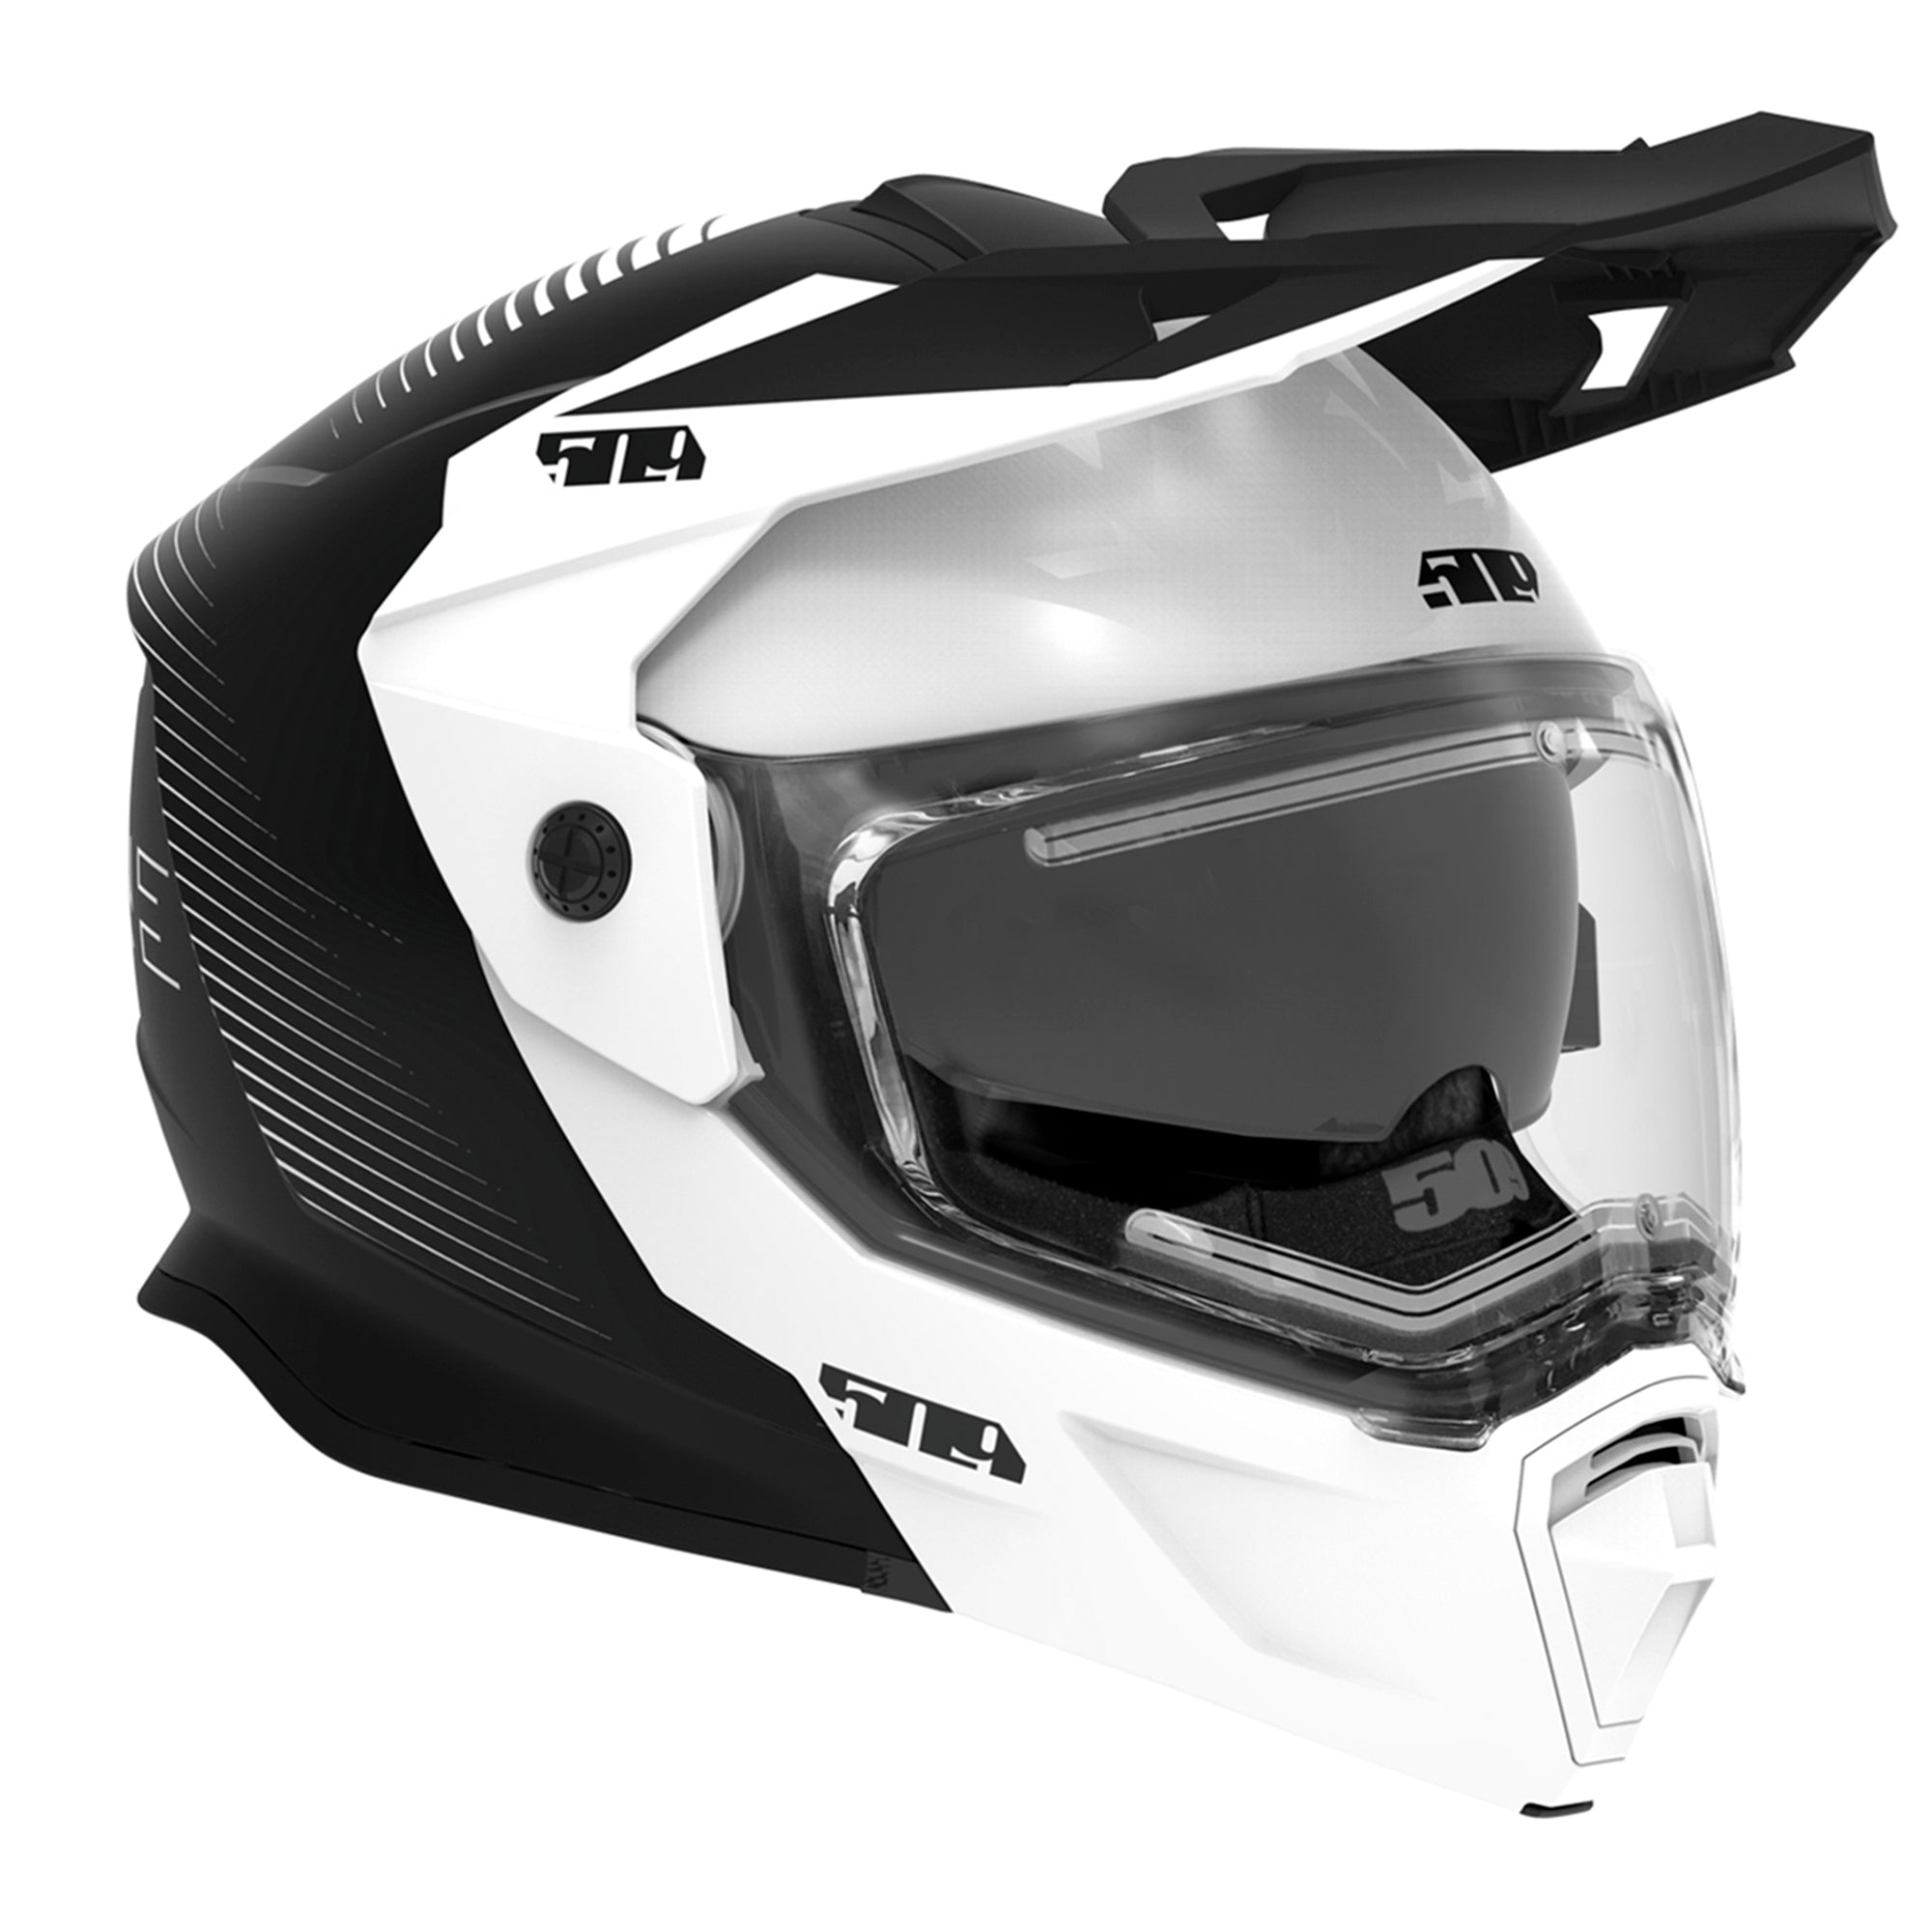 Genuine OEM 509 Delta R4 Ignite Helmet